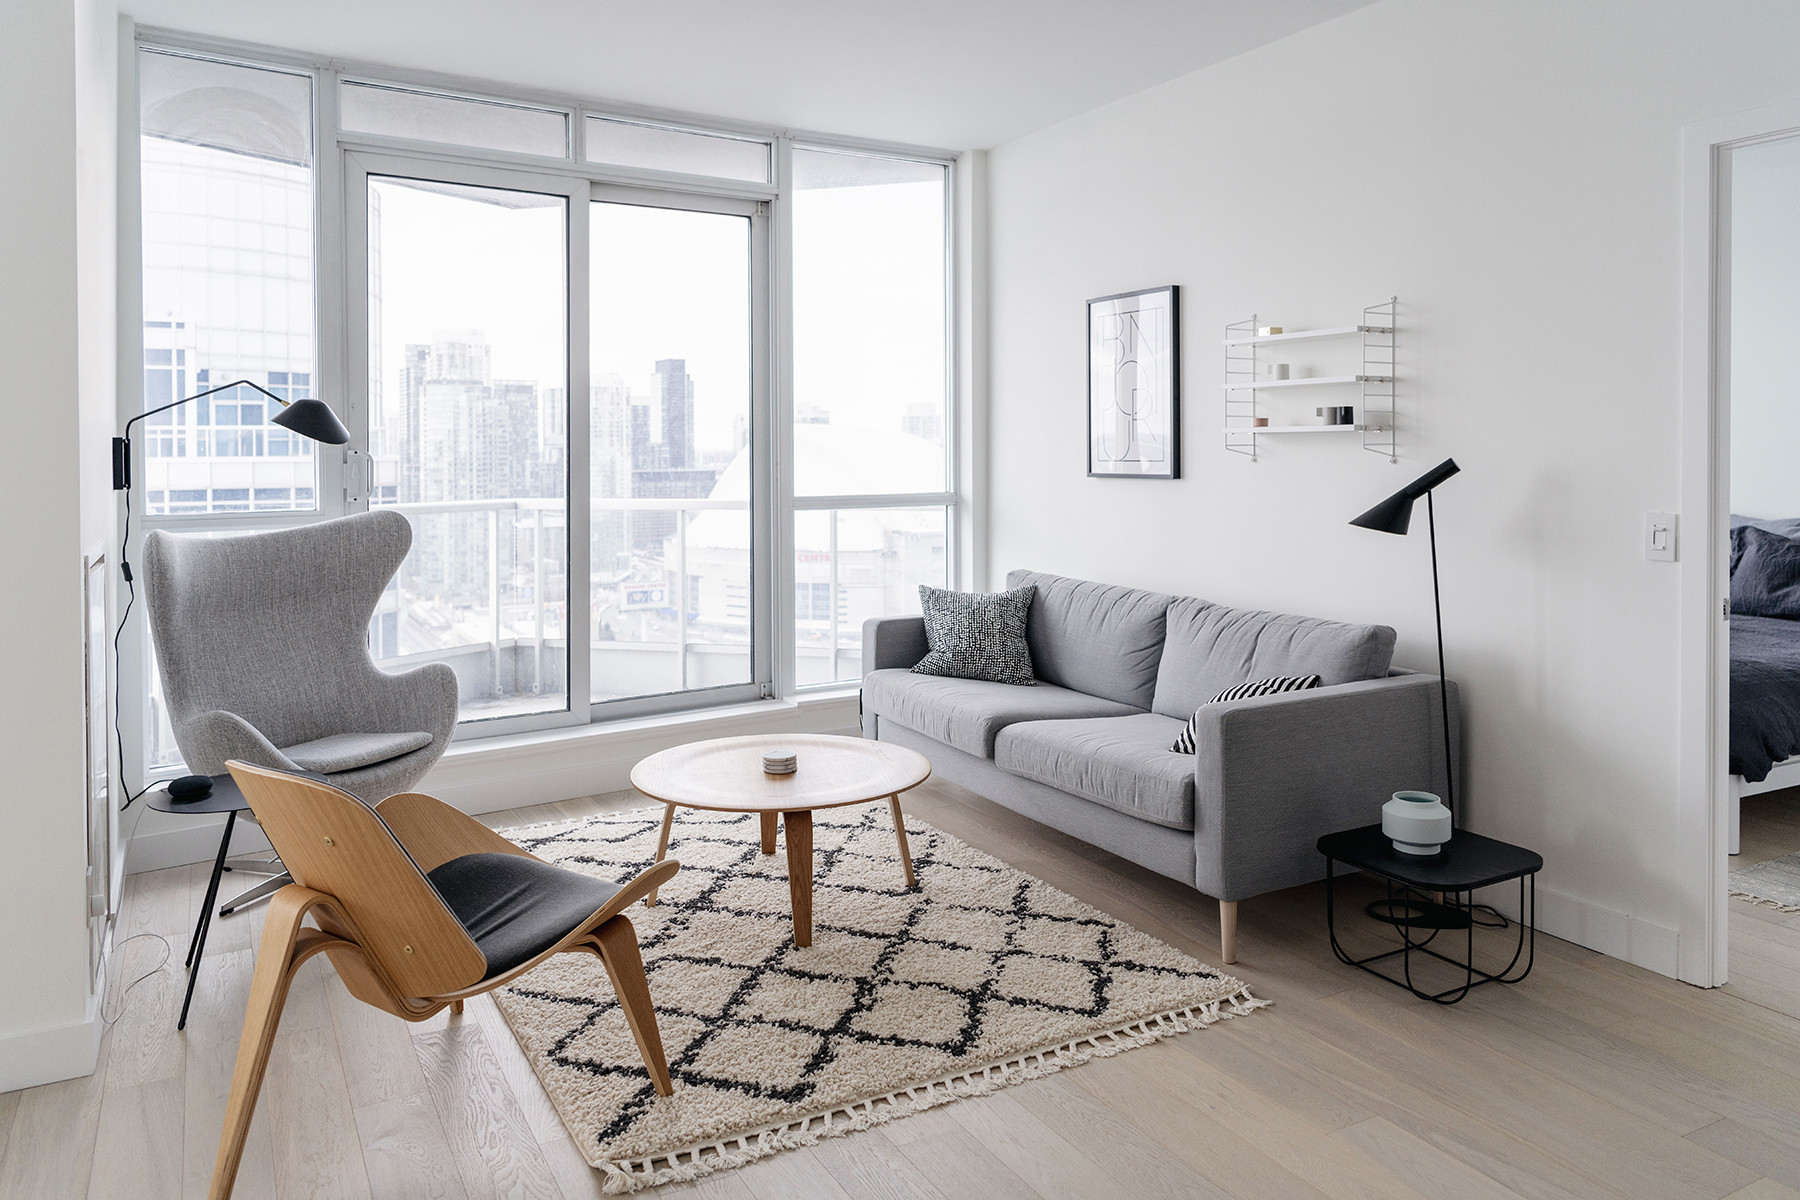 Minimalist Design Living Room
 Condo living room tour a bright minimalist space